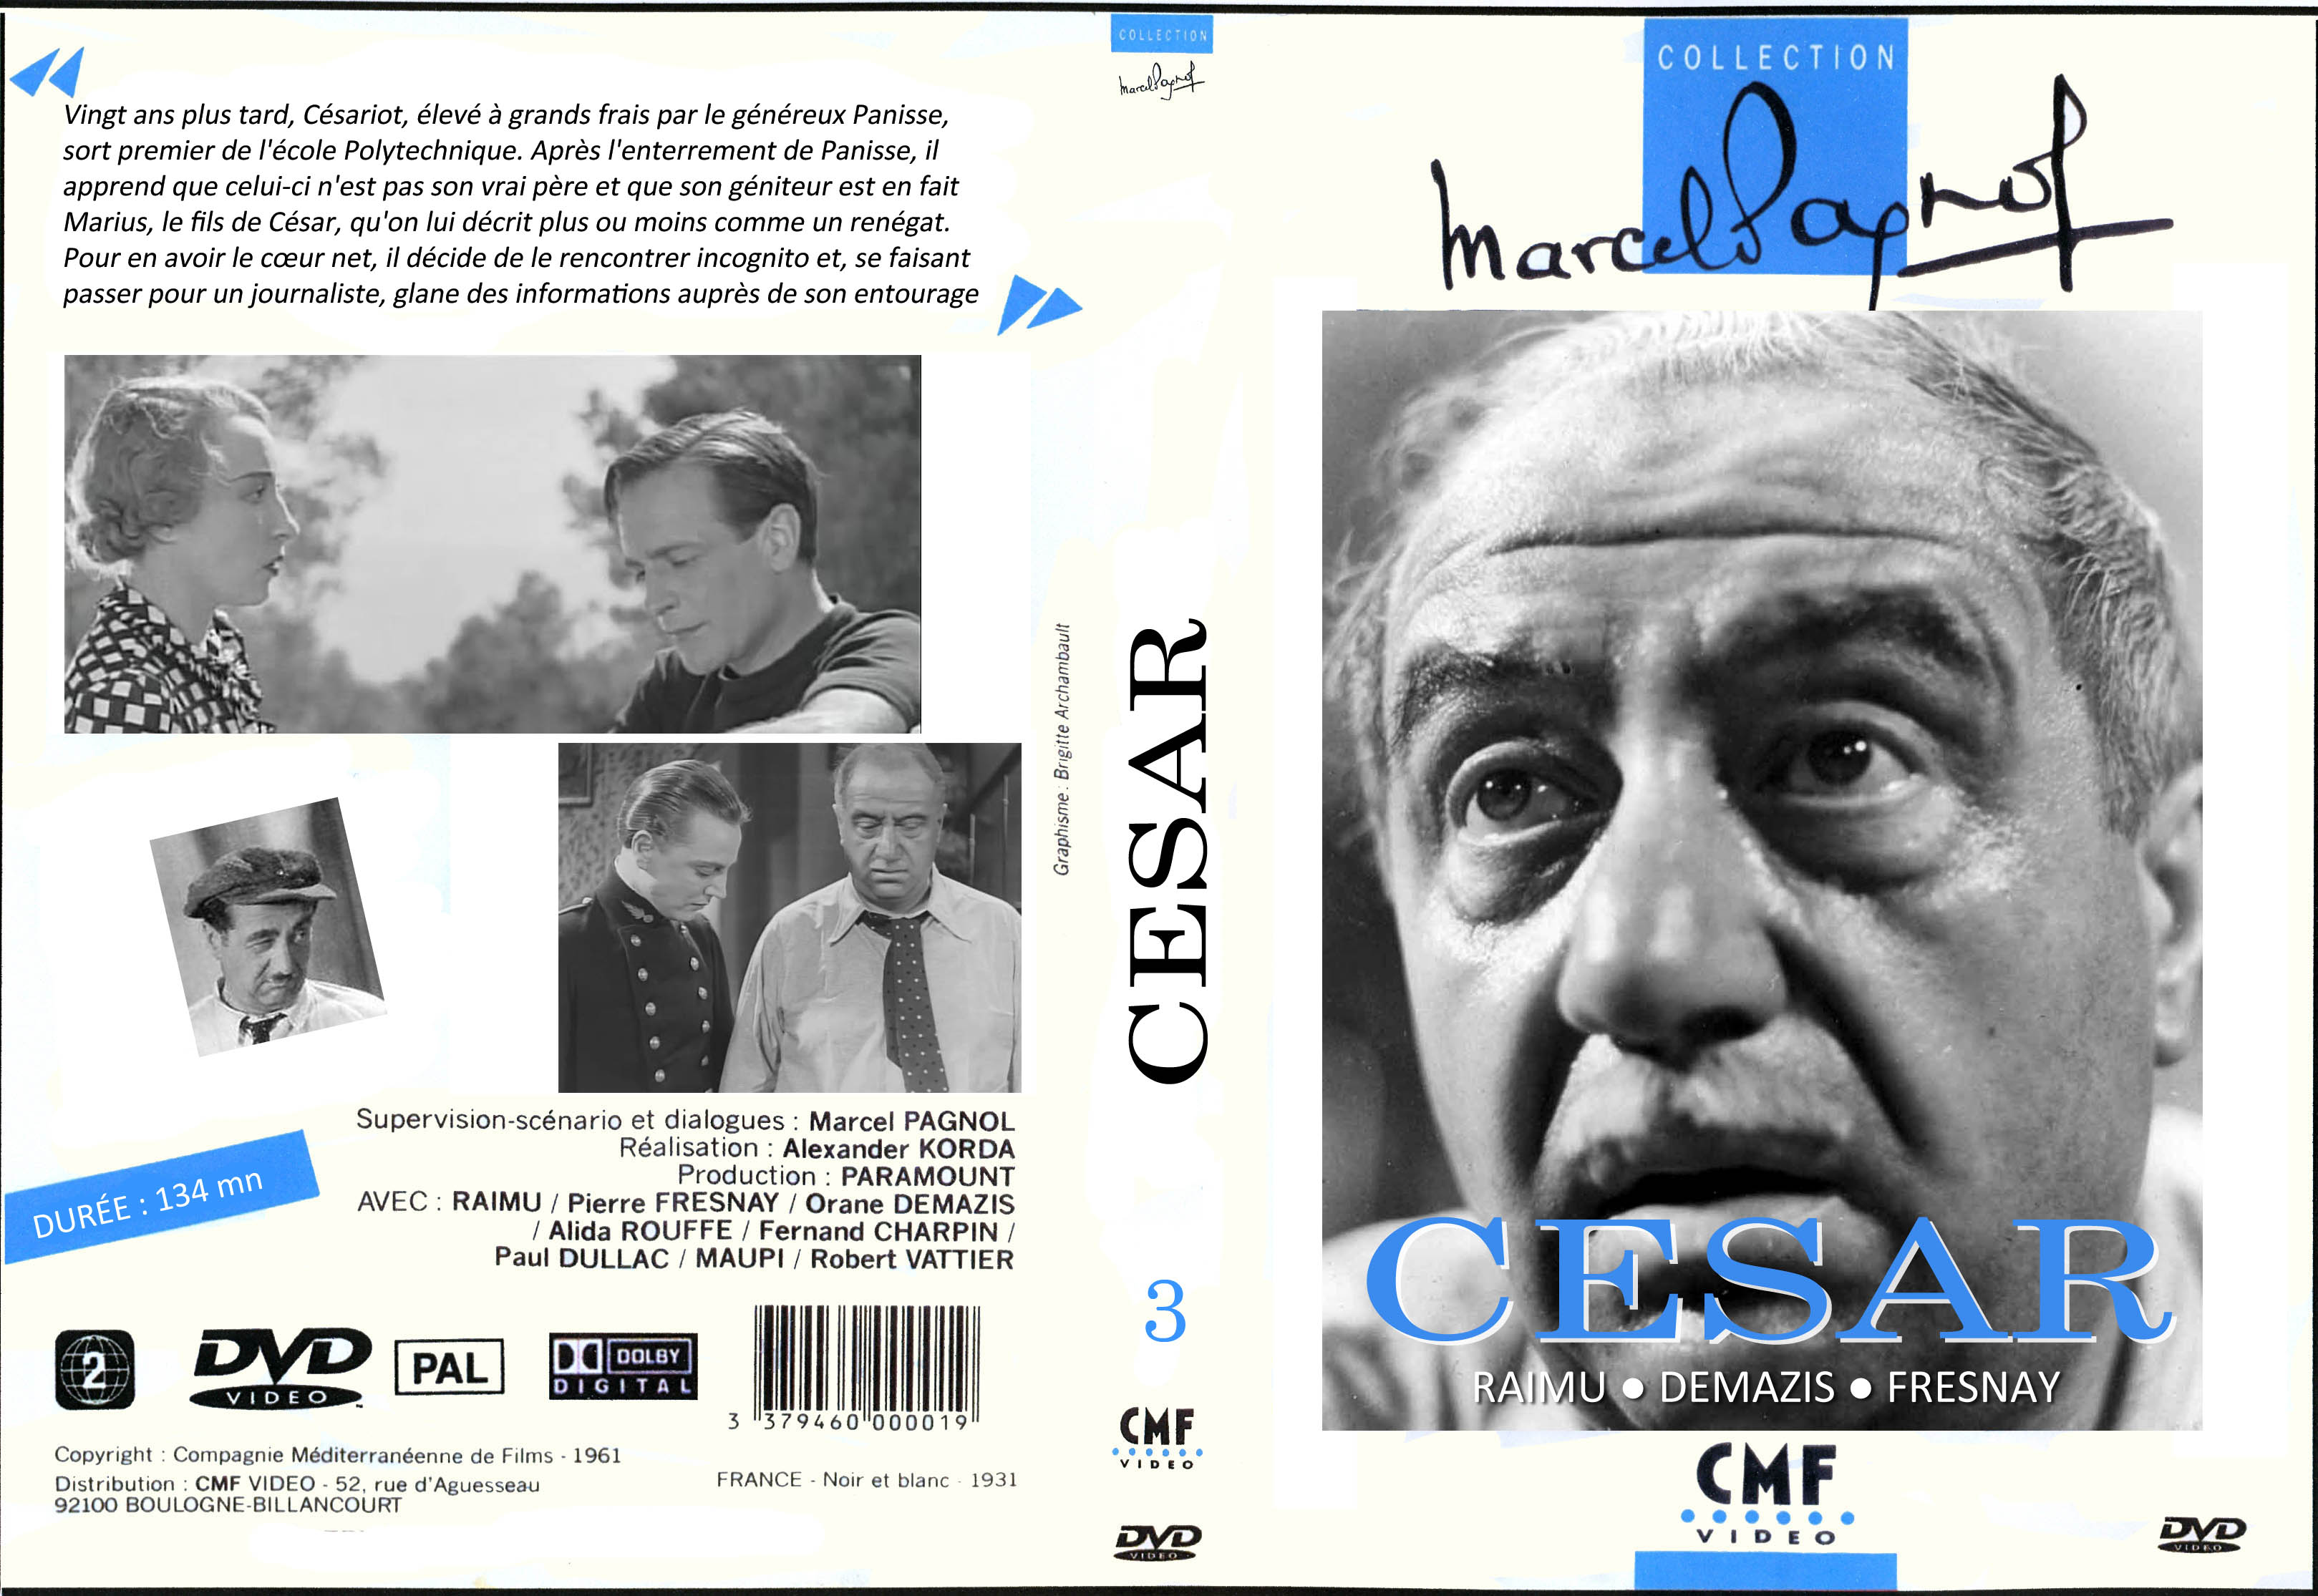 Jaquette DVD Cesar custom